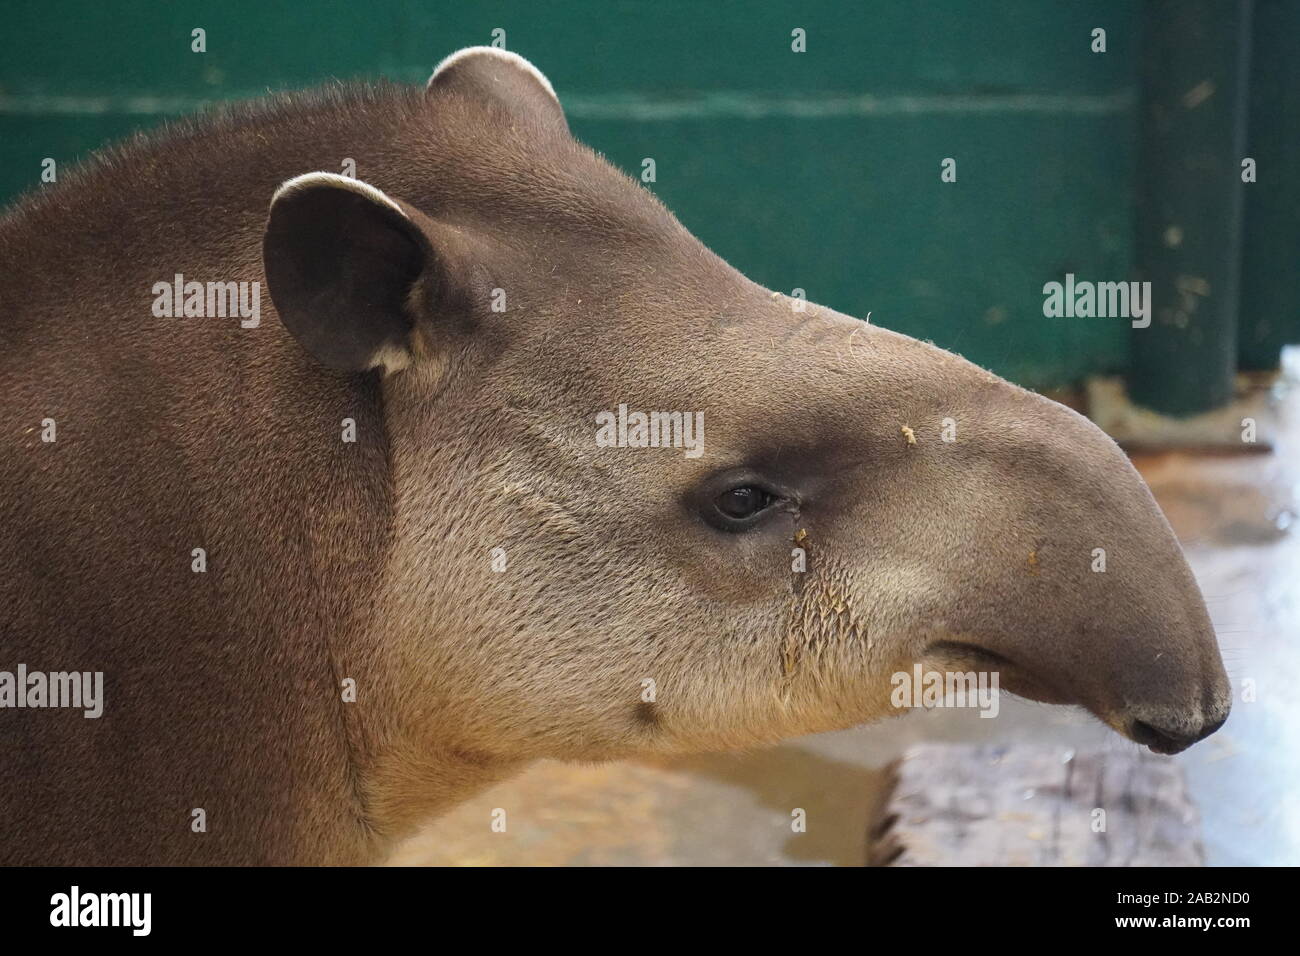 South American tapir Stock Photo